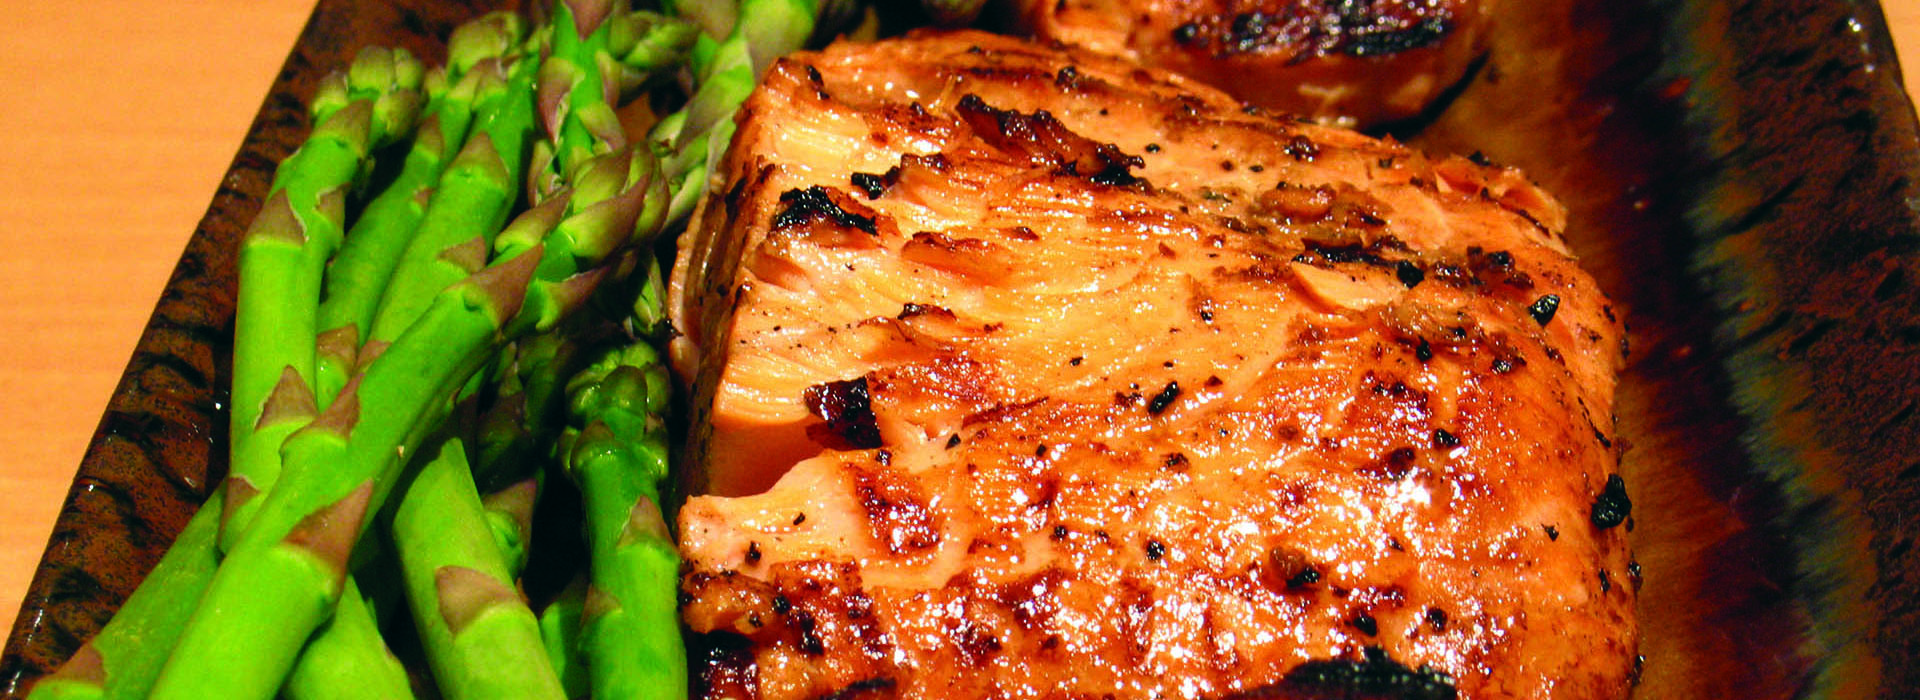 h-grilled-salmon.jpg